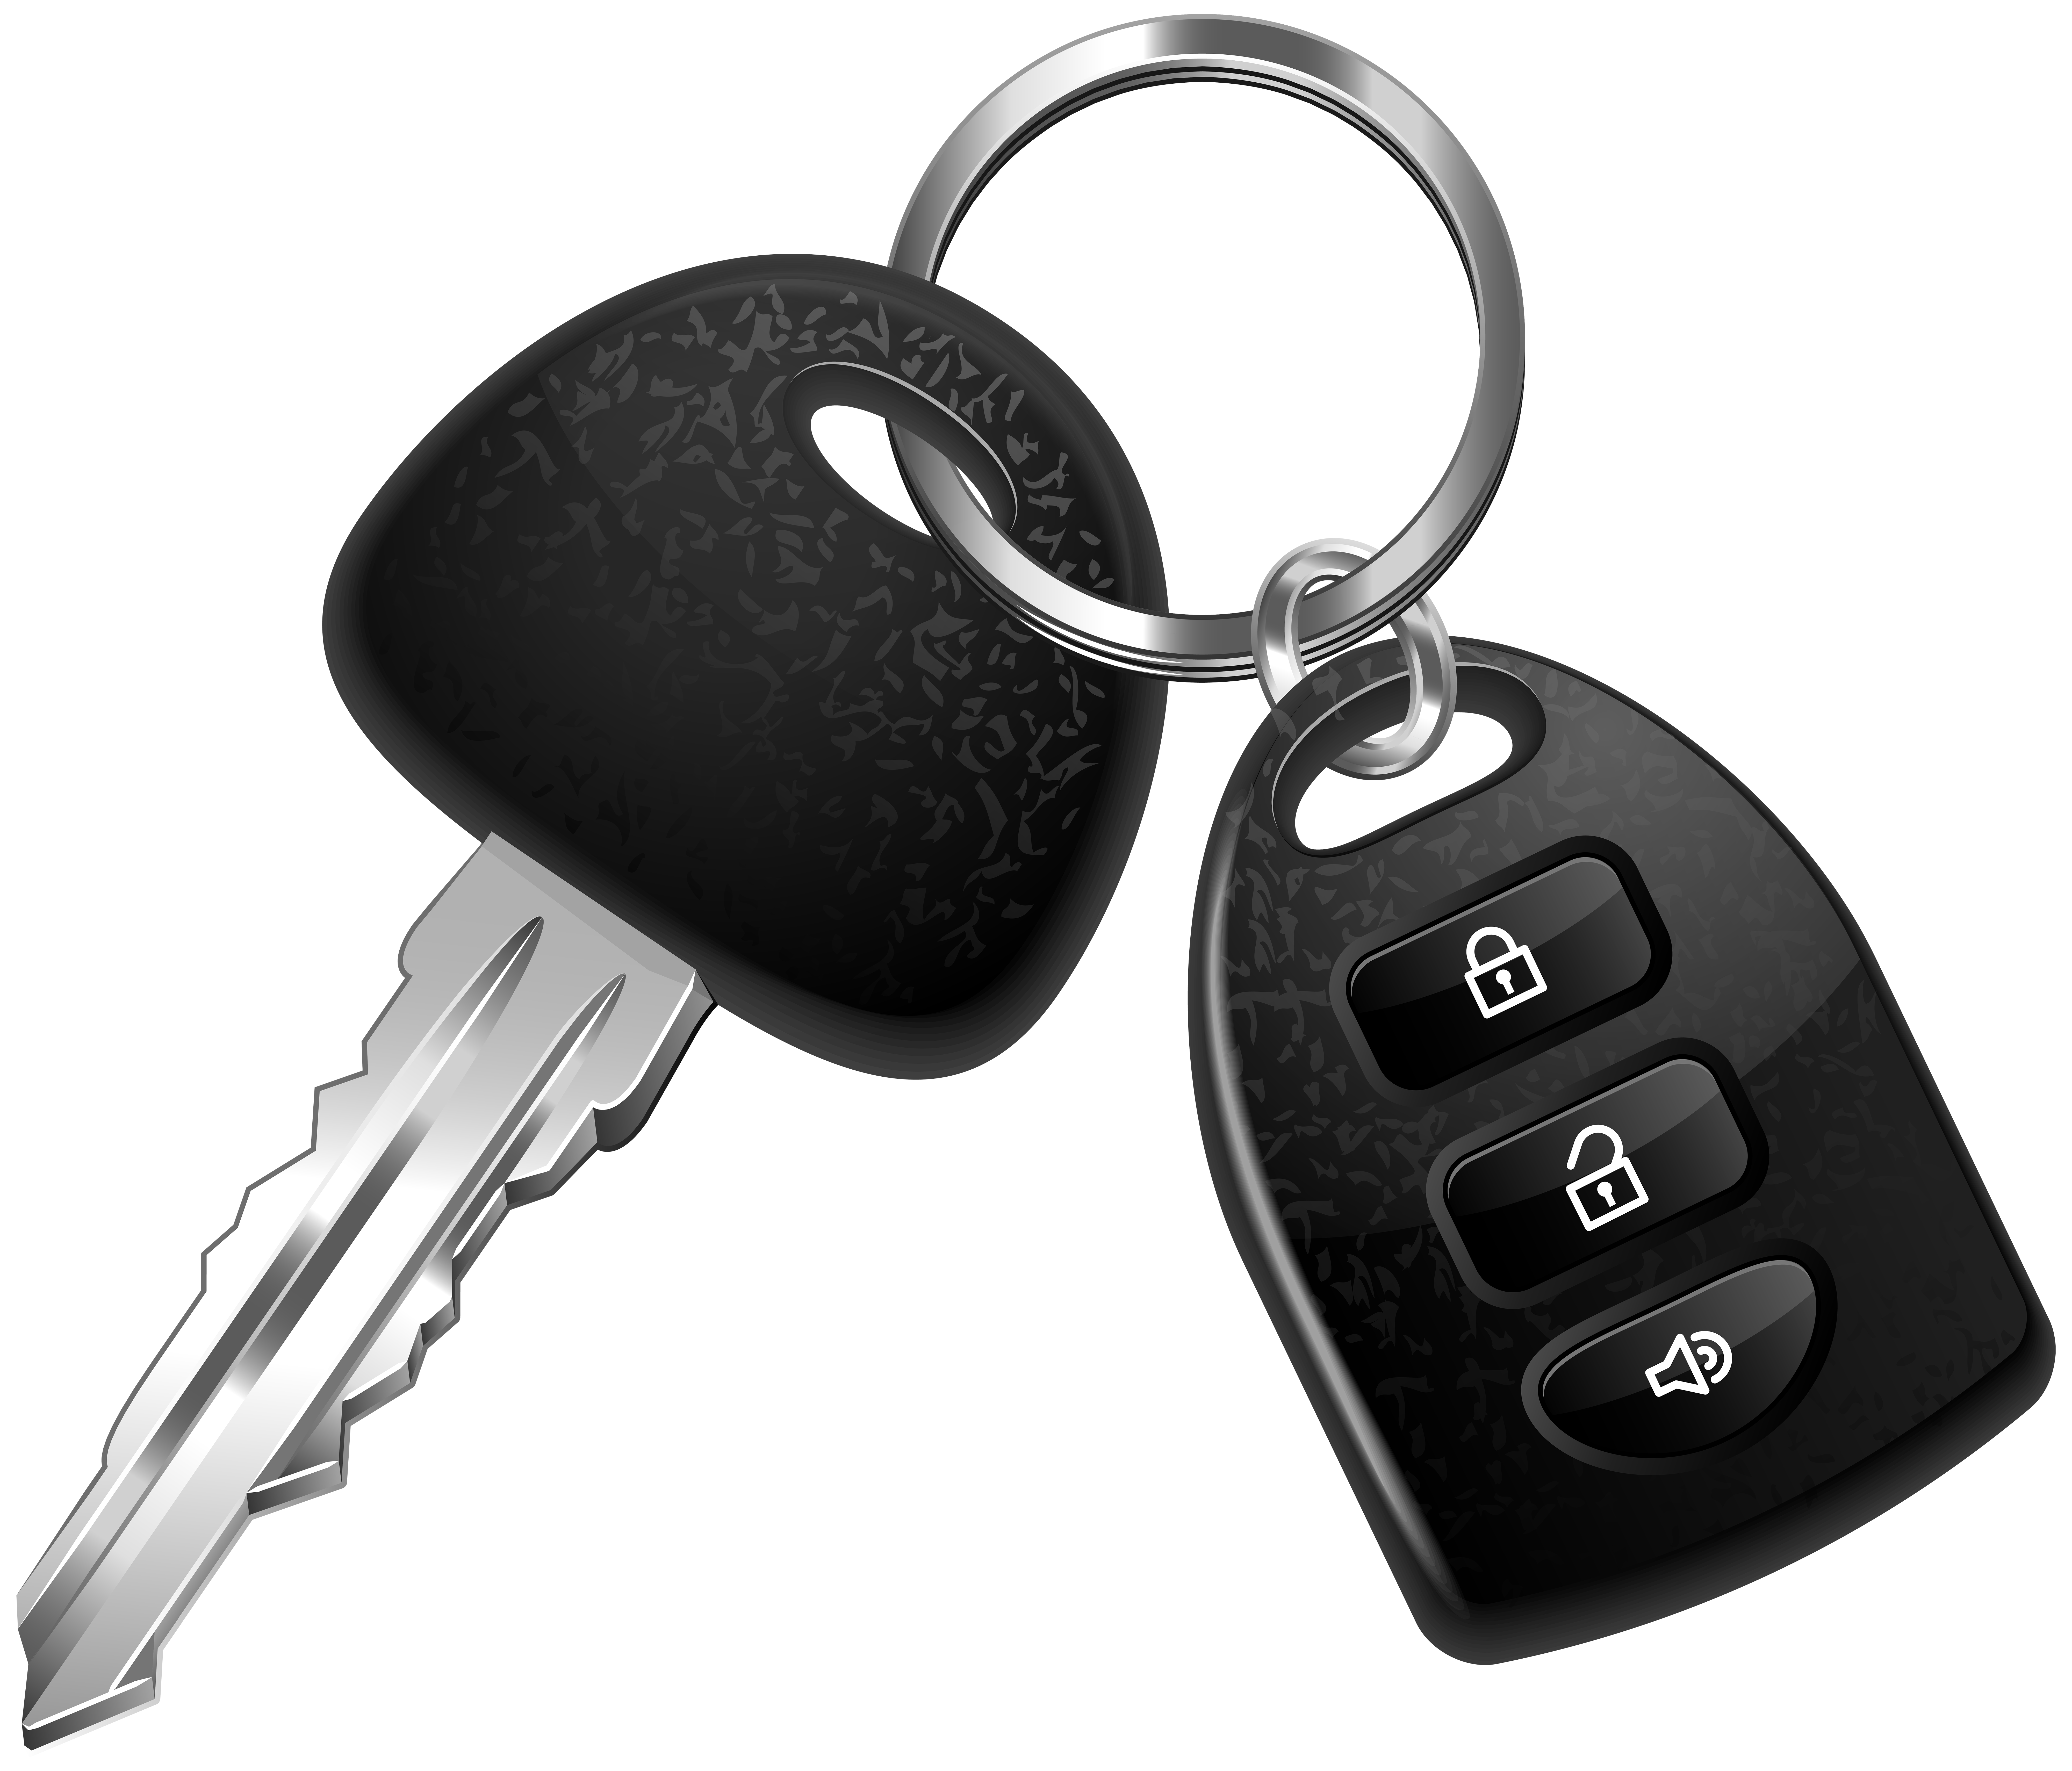 Free Car Keys Cliparts, Download Free Car Keys Cliparts png images